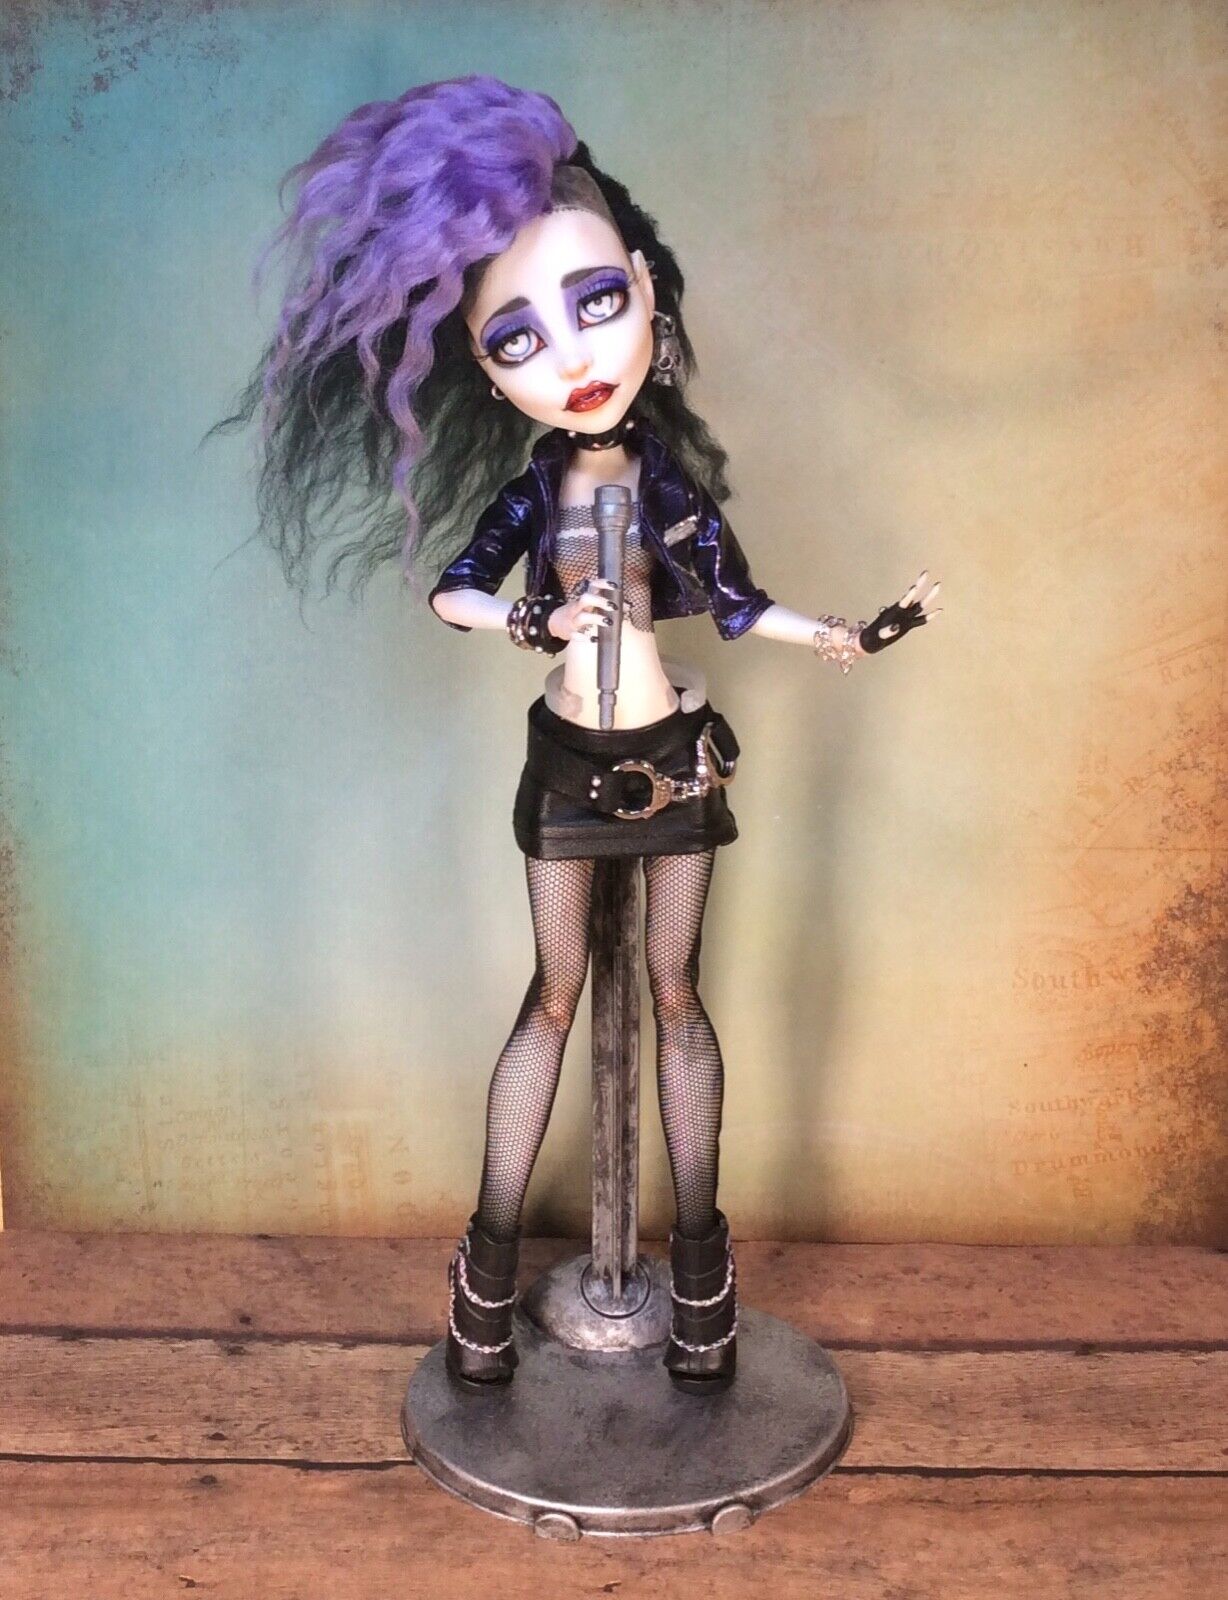 Monster High Spectra OOAK doll by artist Vanessa Monique Mattel